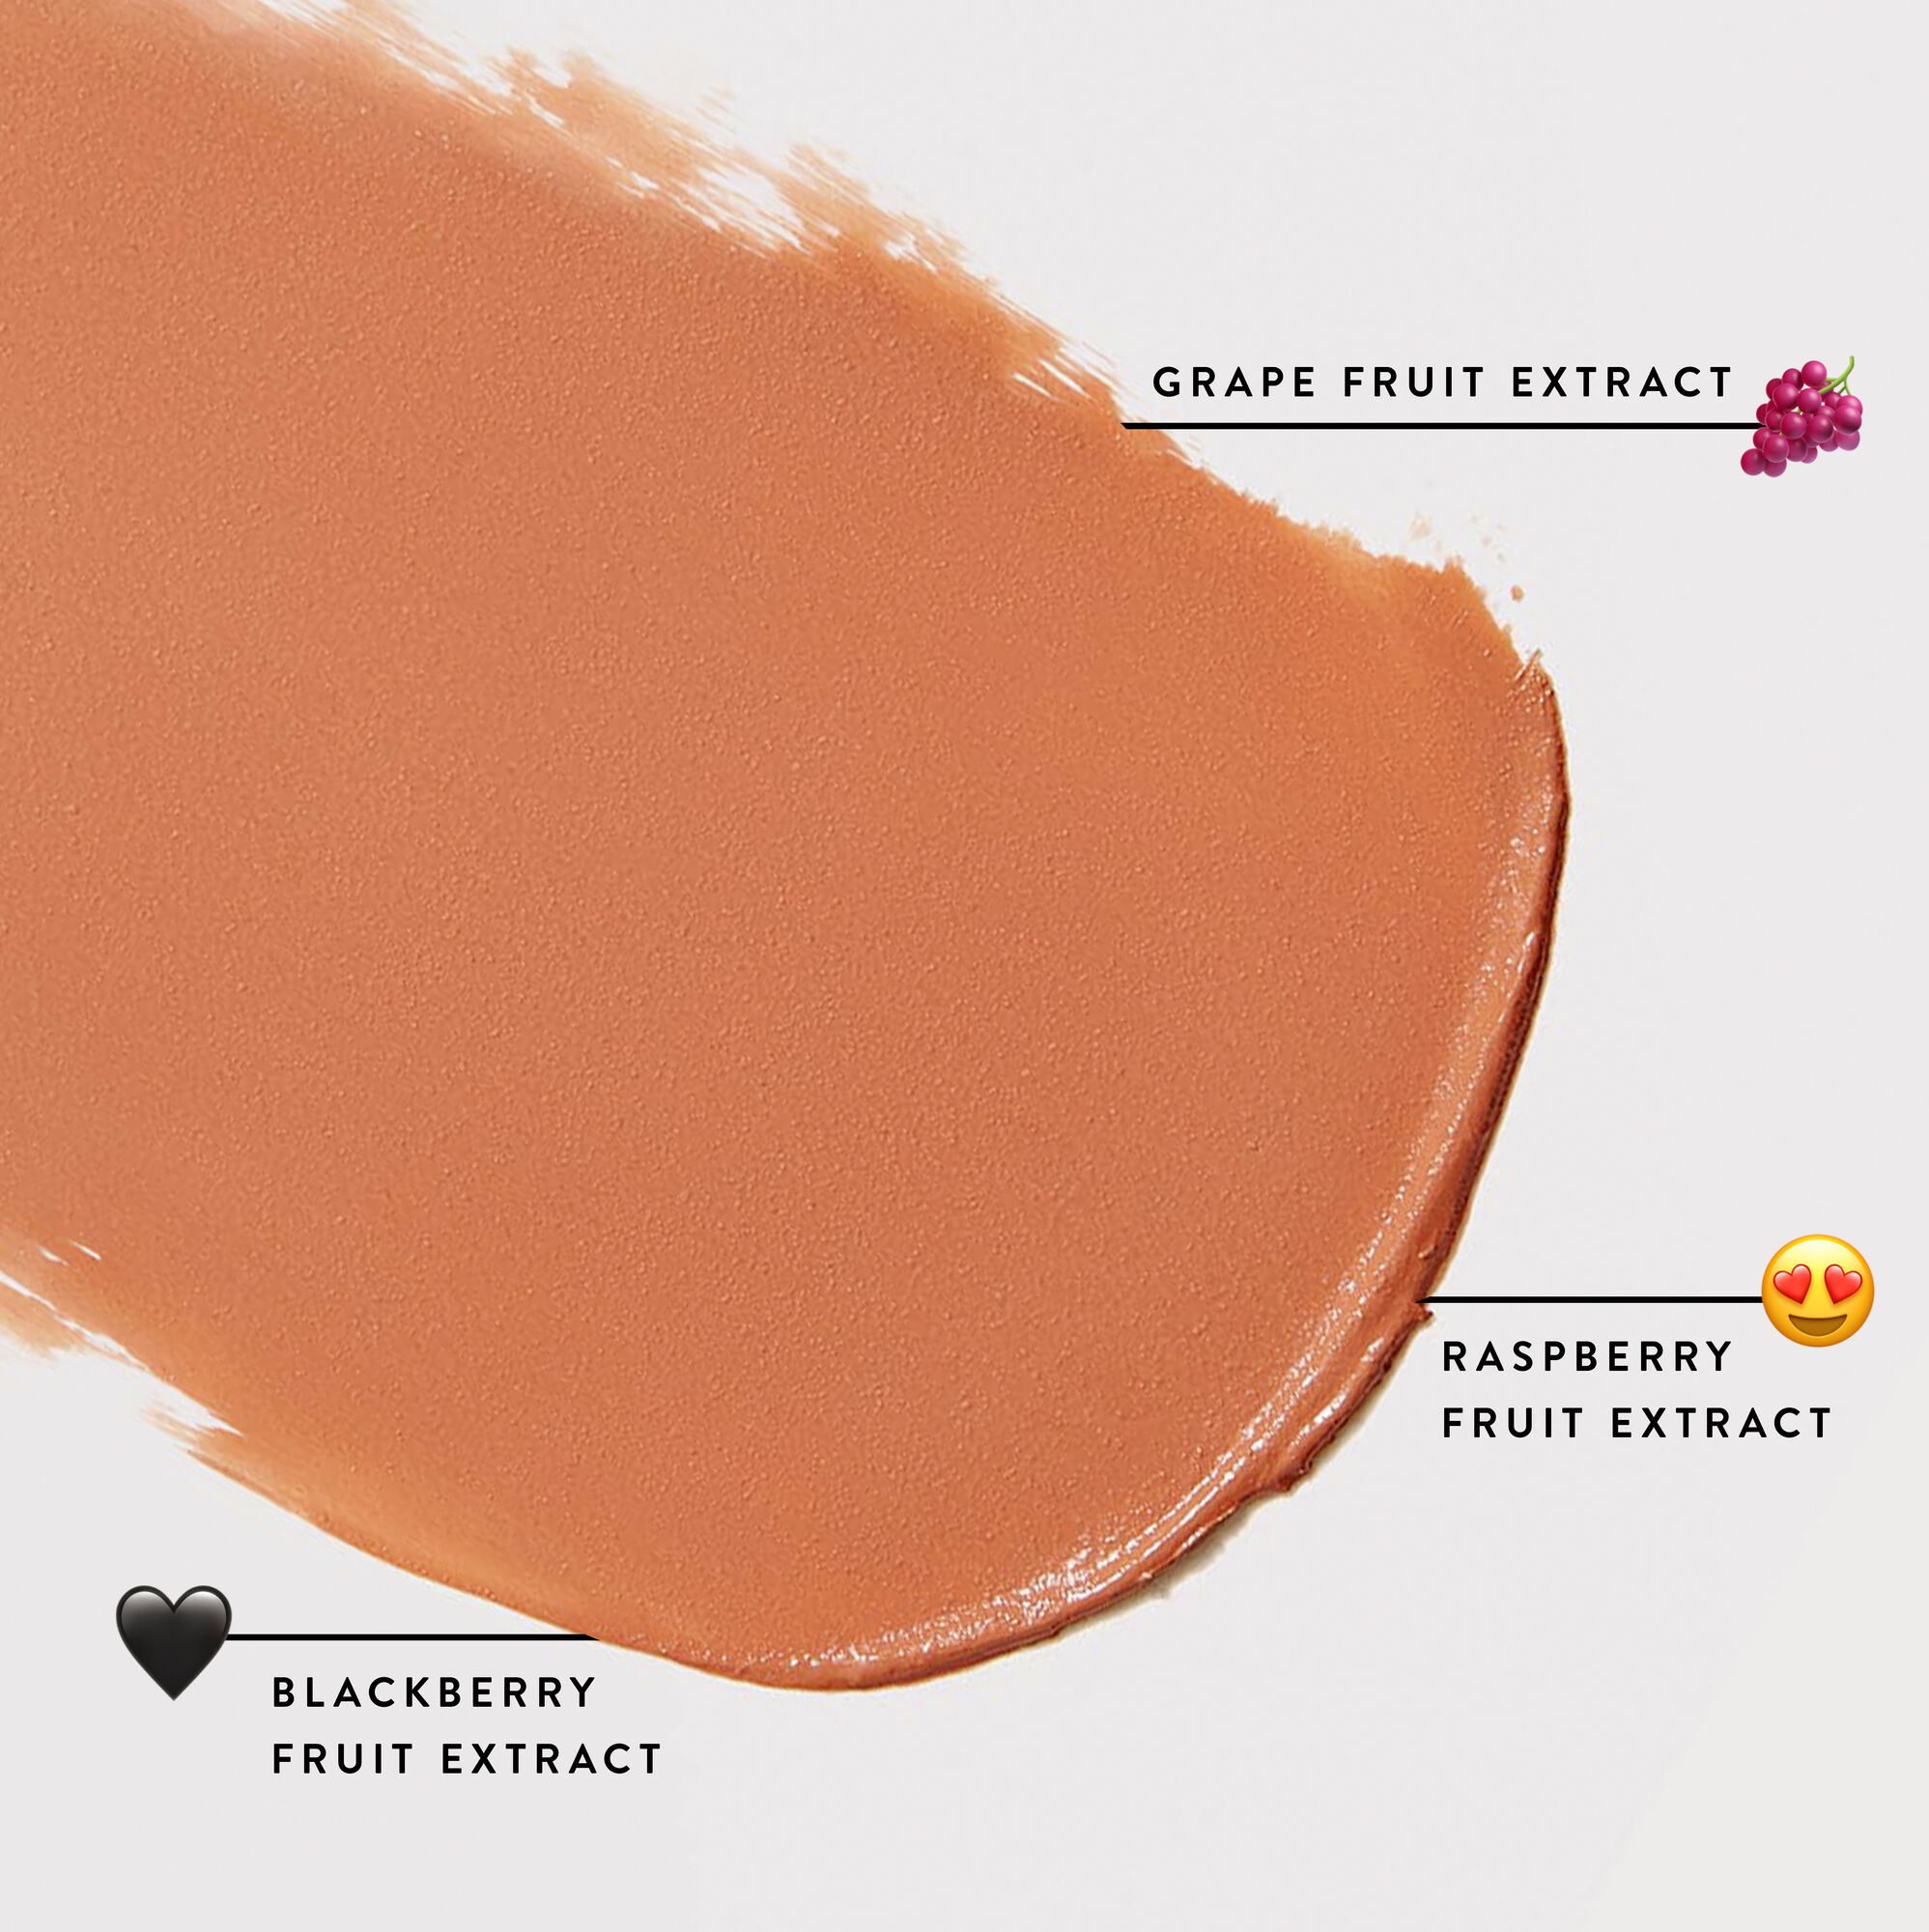 Creme Cheek + Lip Color, Plum Berry